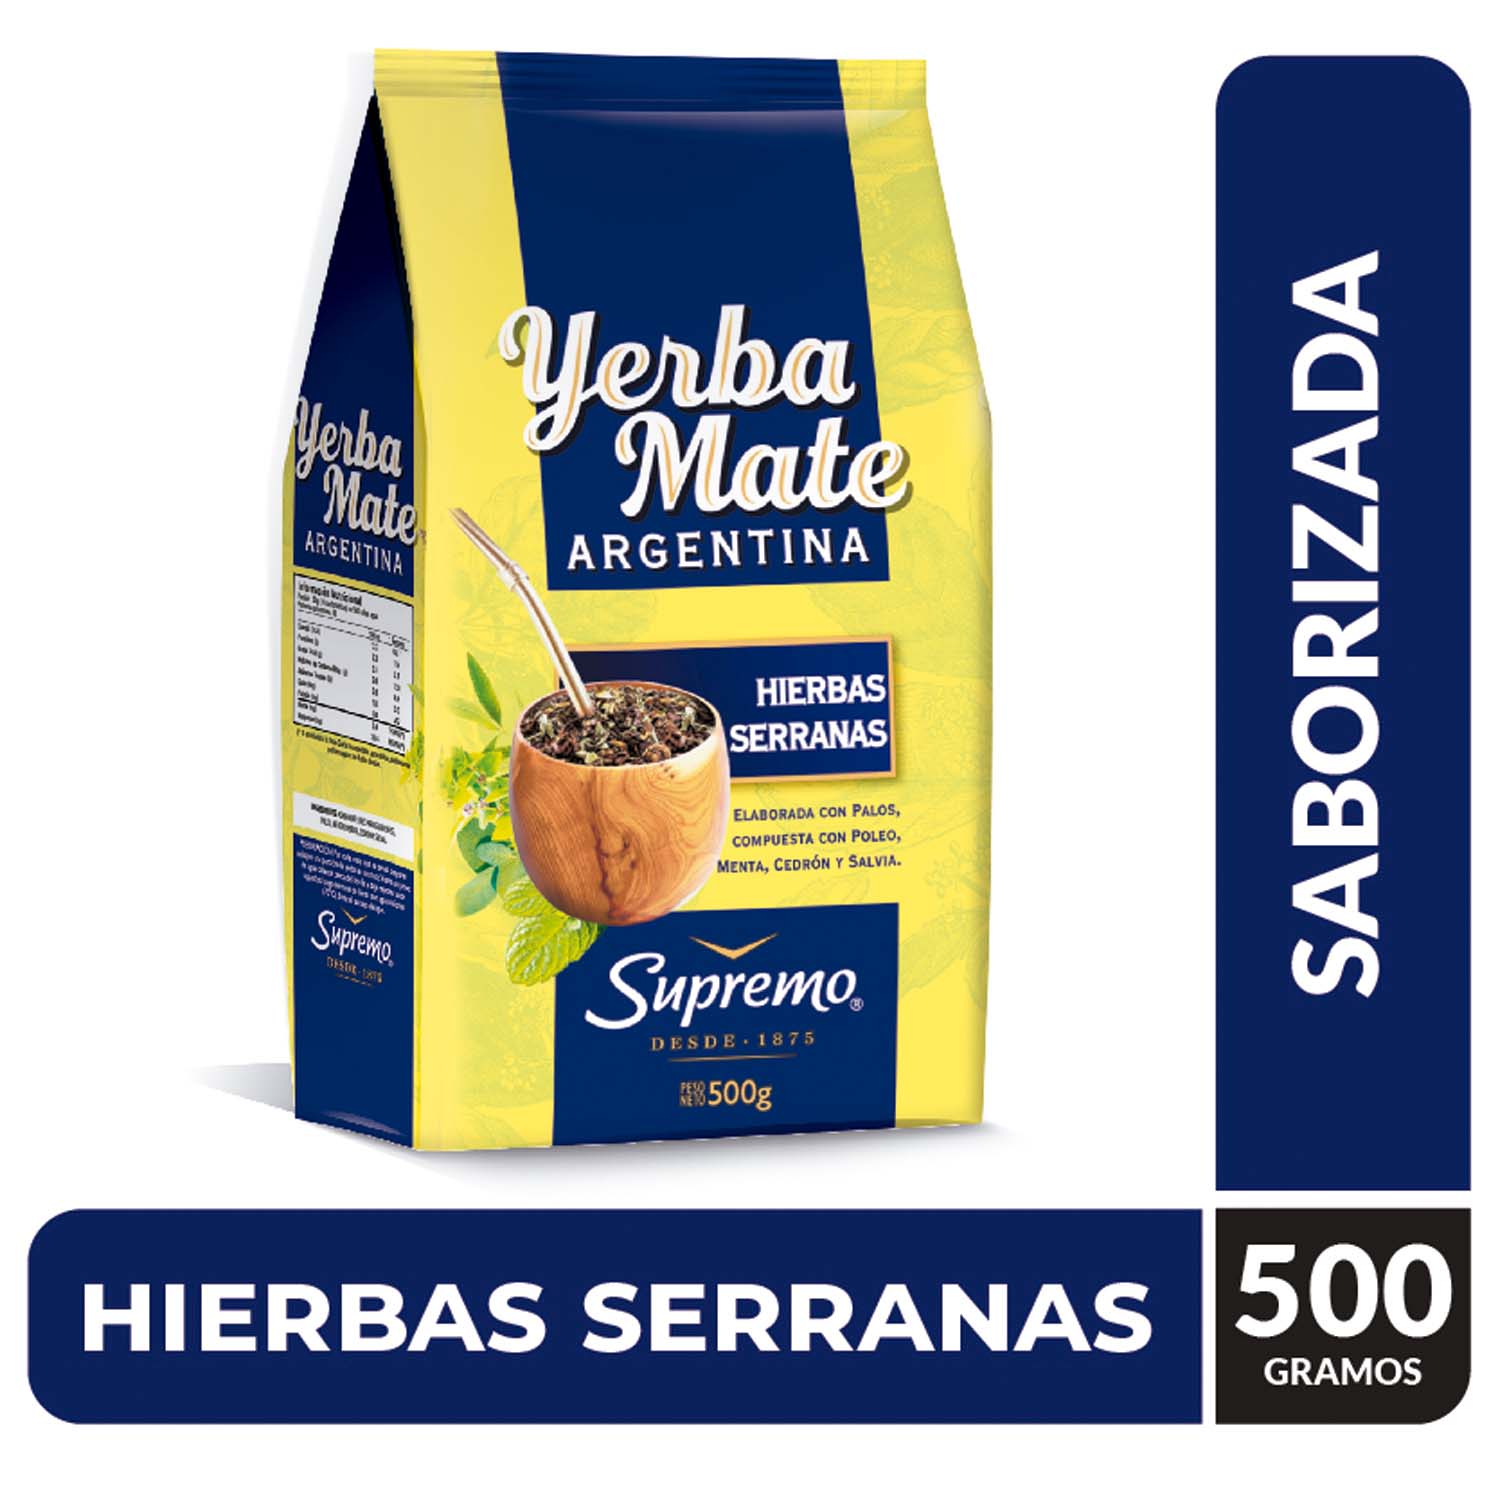 Yerba mate argentina serrana 500 g